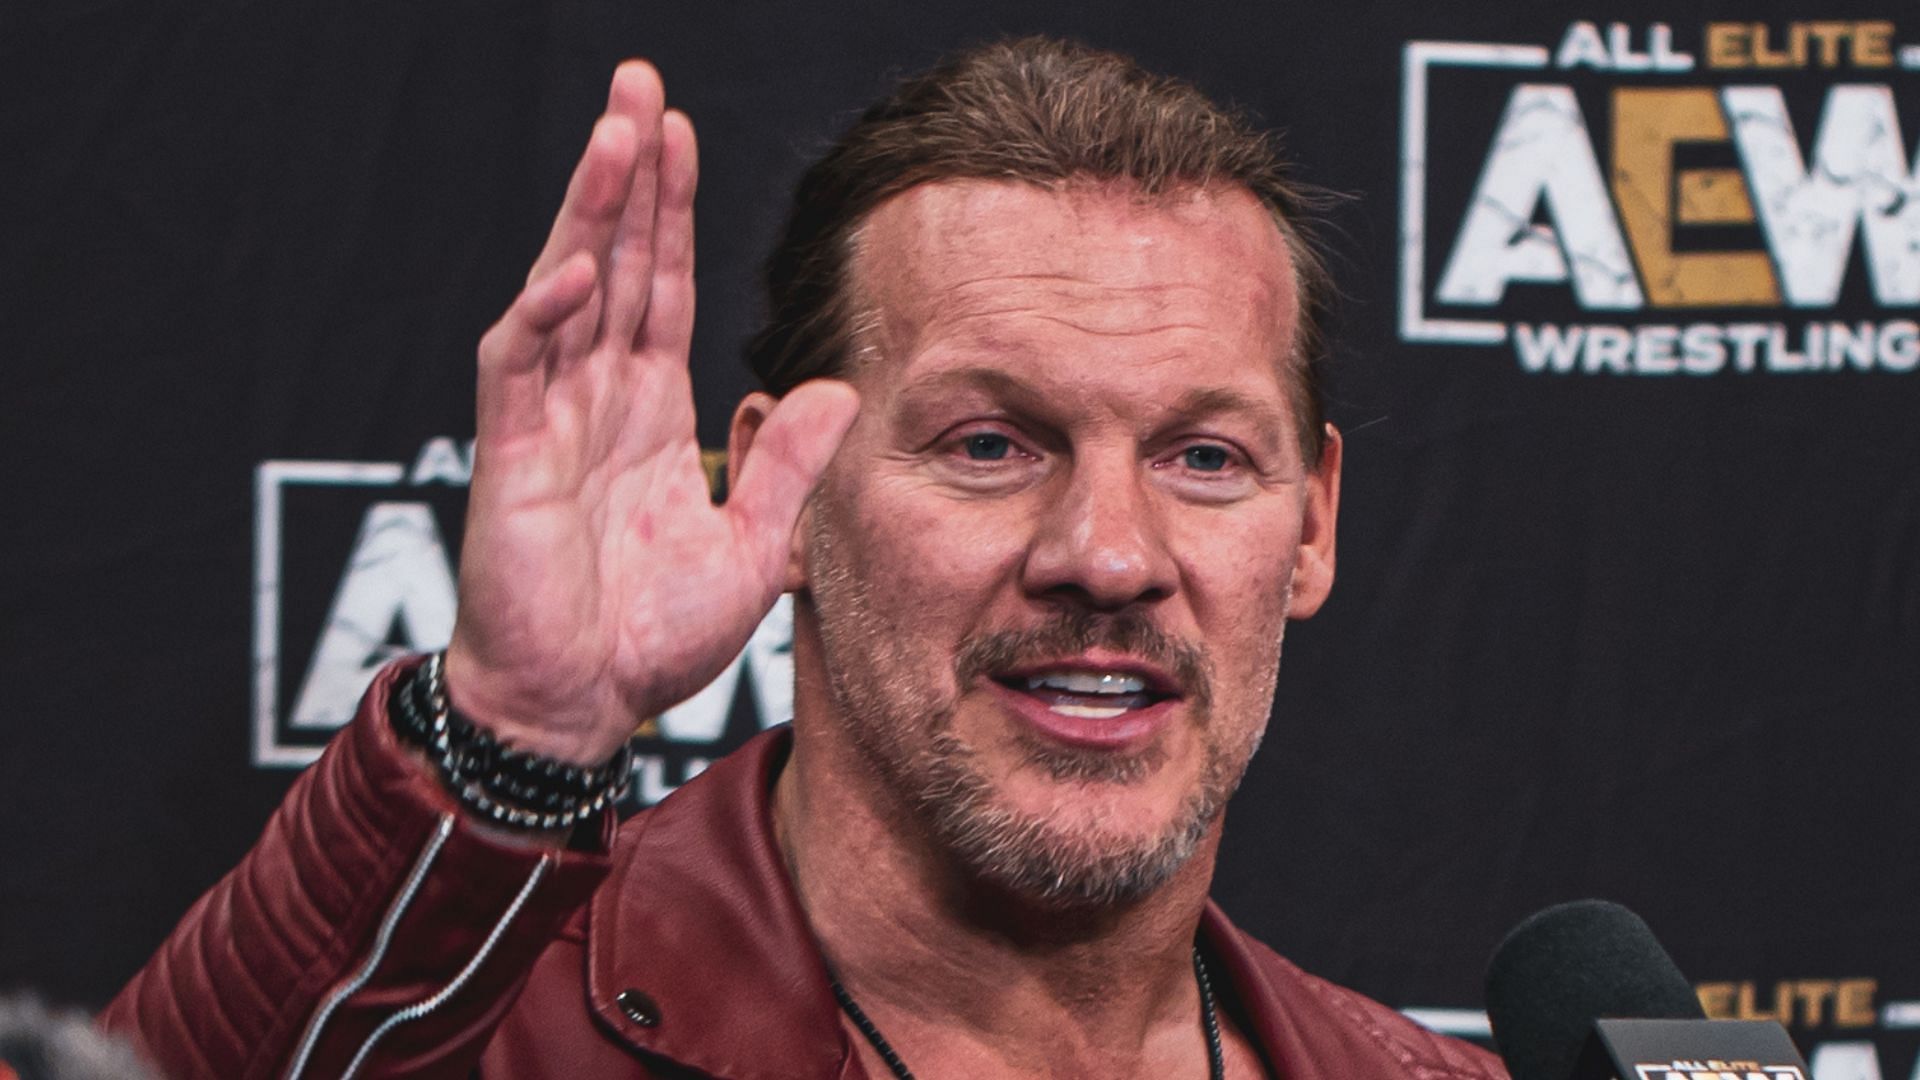 Chris Jericho has broken character to praise an AEW star